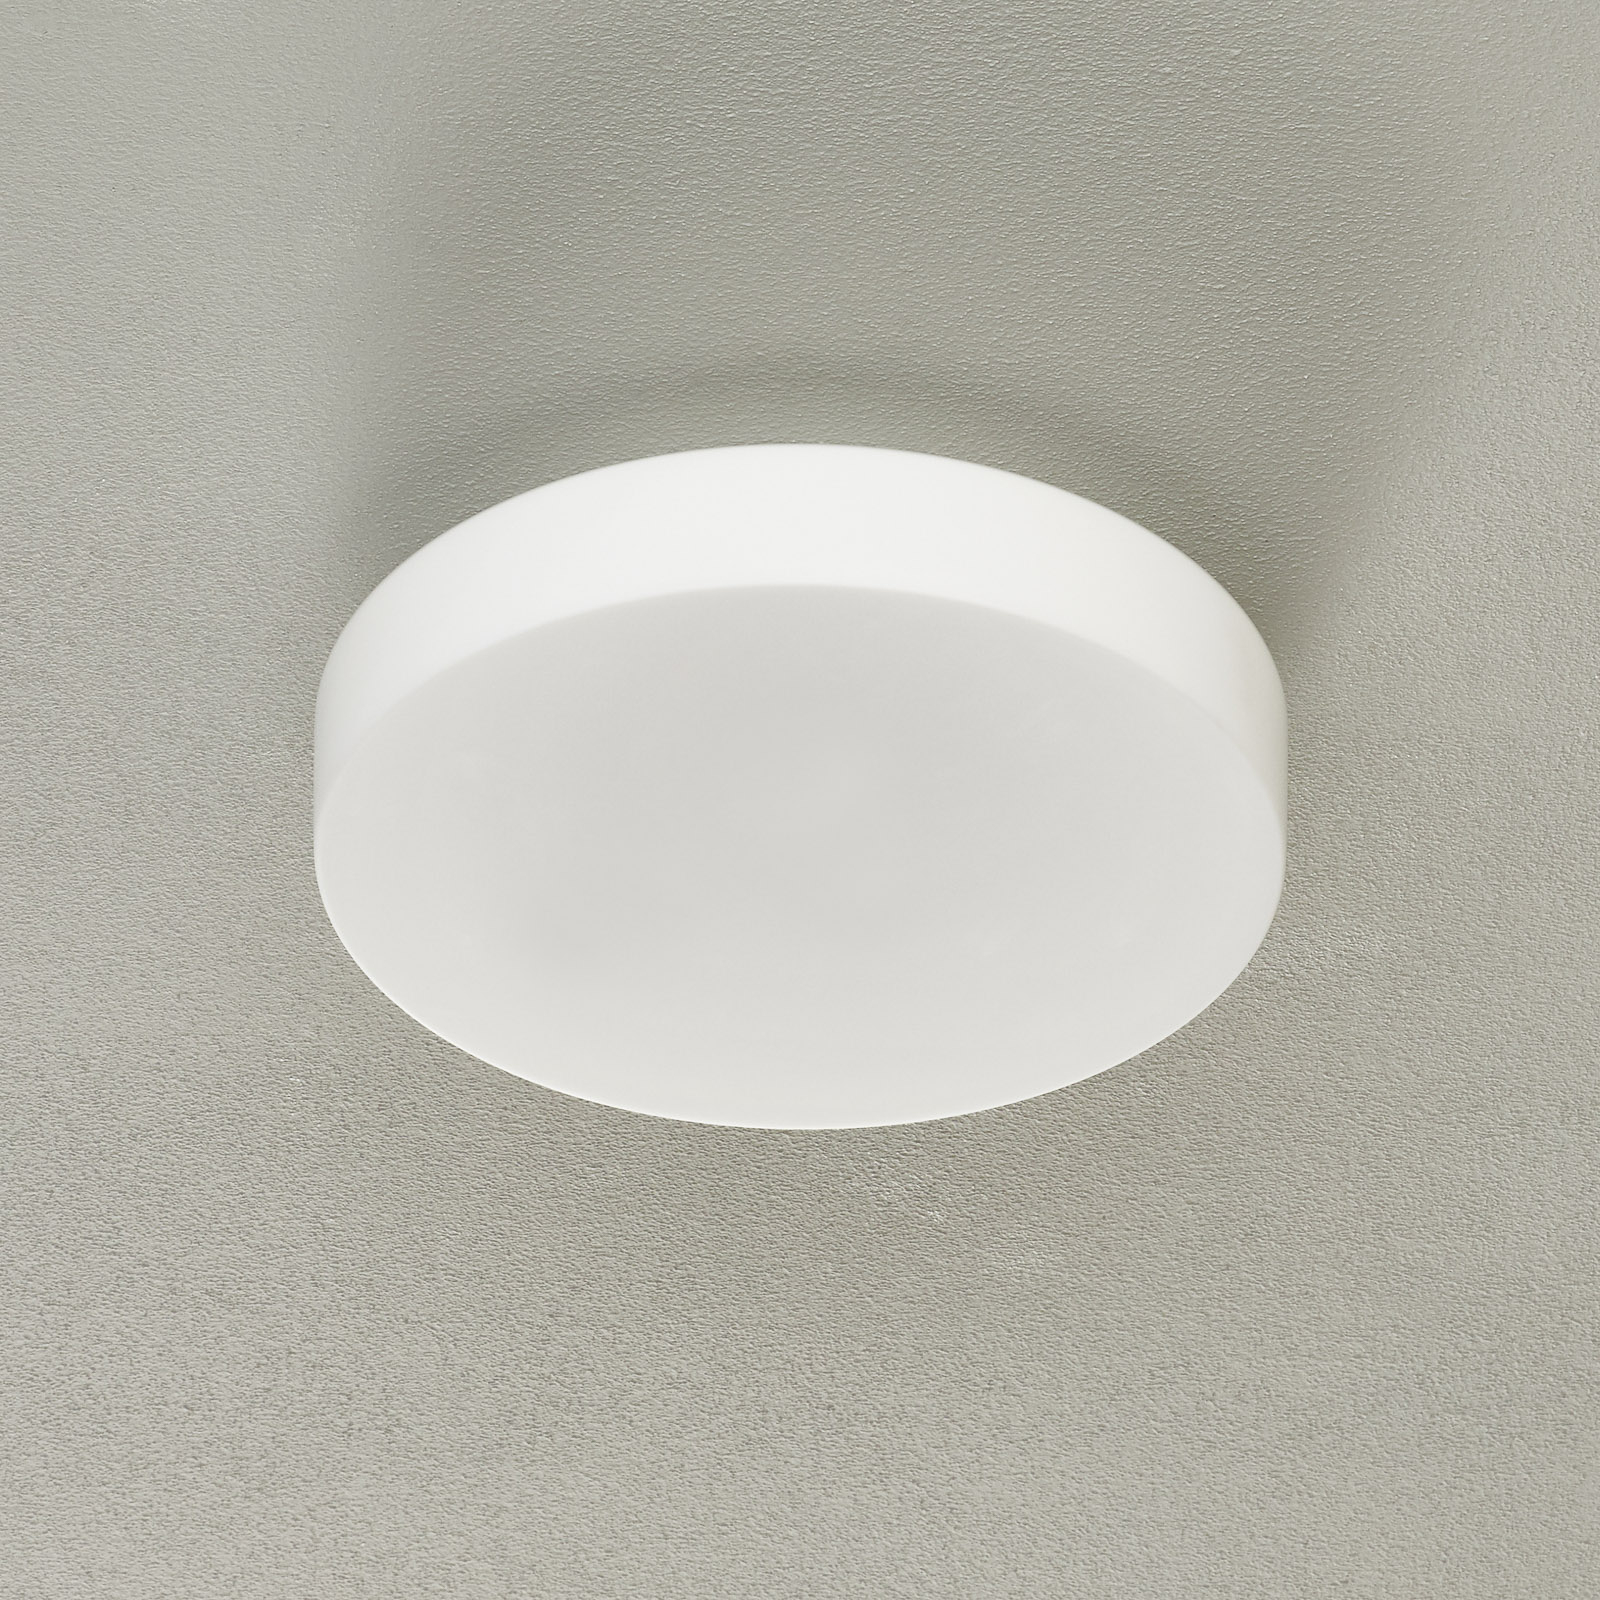 BEGA 34287 plafonnier LED blanc DALI Ø 34 cm